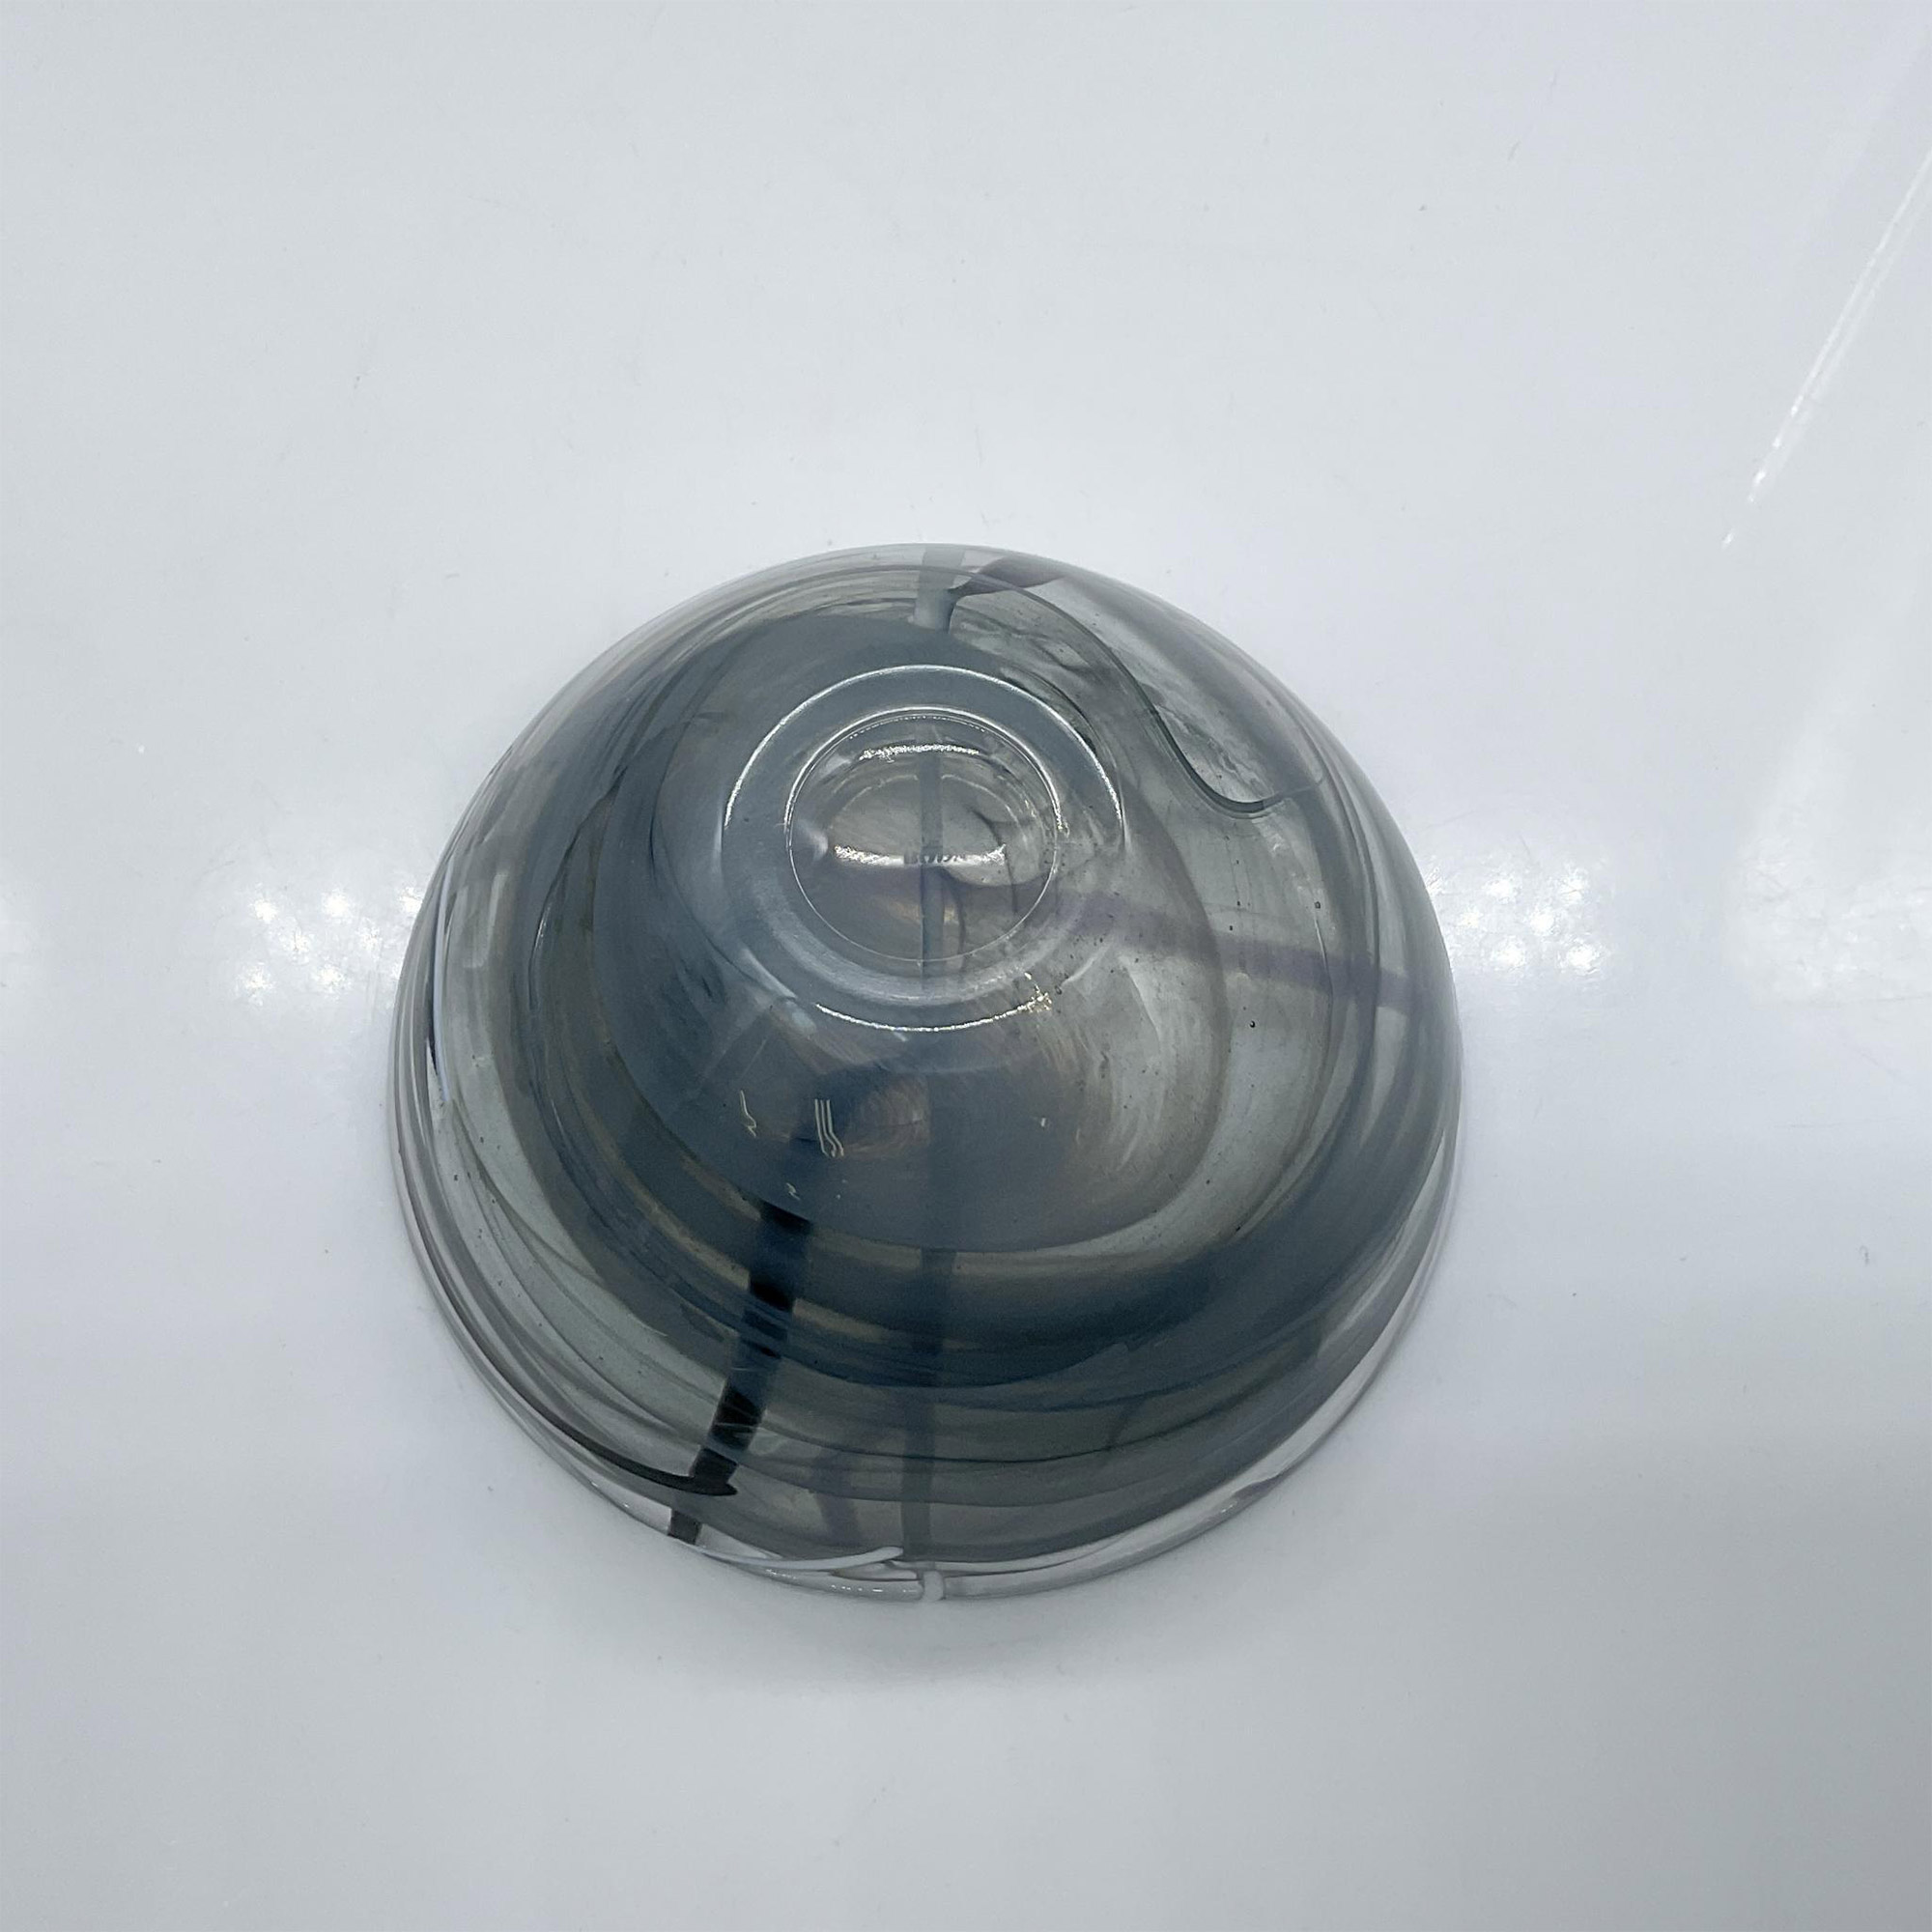 Kosta Boda Glass Bowl, Grey/Black/White - Image 3 of 3